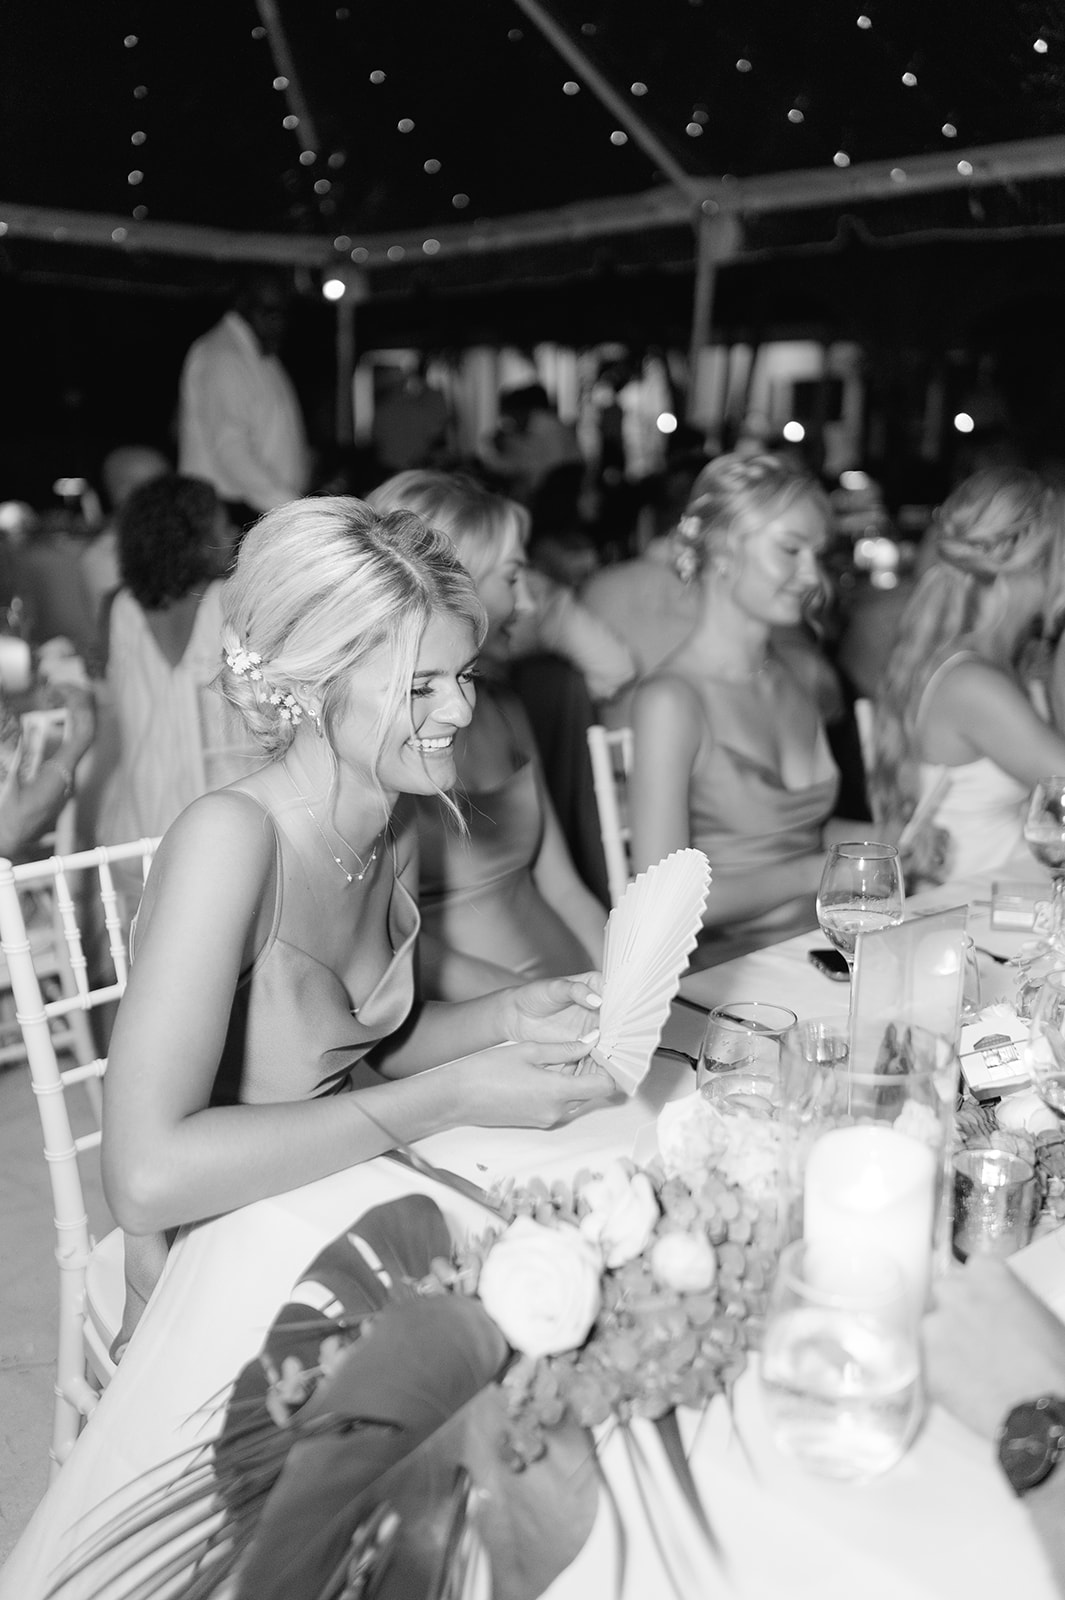 Luxury wedding photographer captures the perfect wedding day memories
